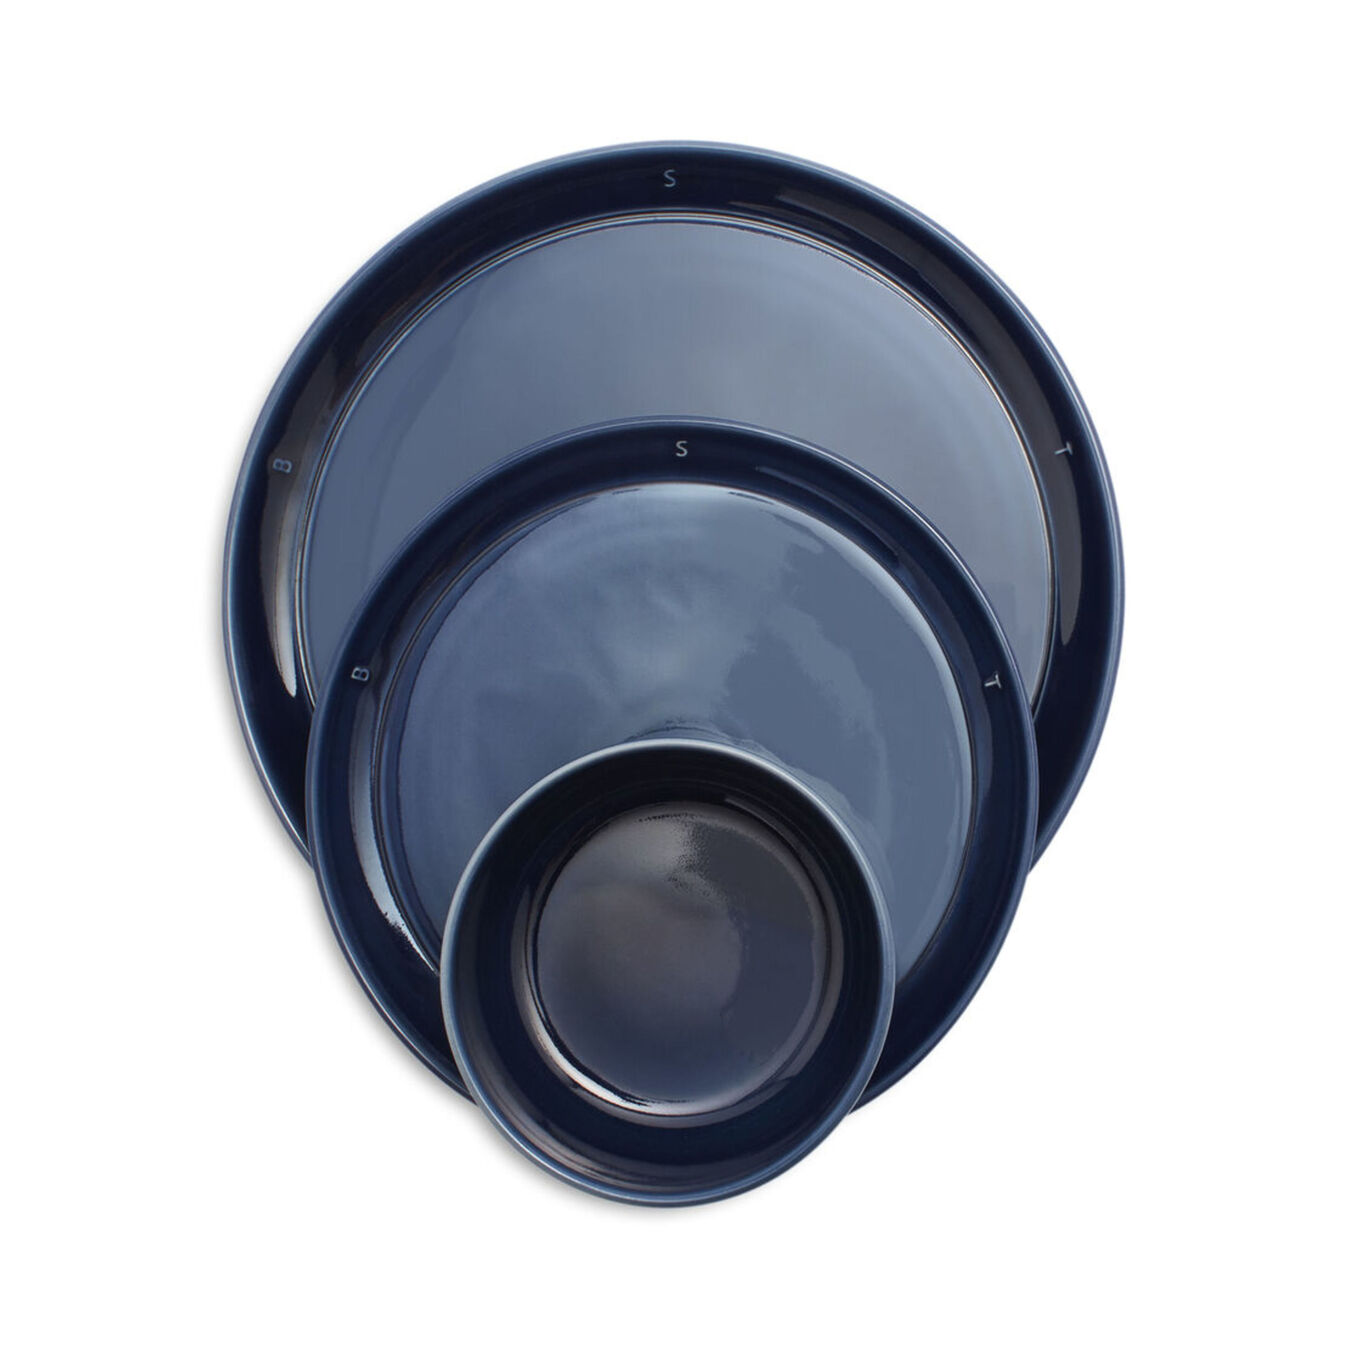 Serving set, 12 Piece | dark-blue | ceramic,,large 1